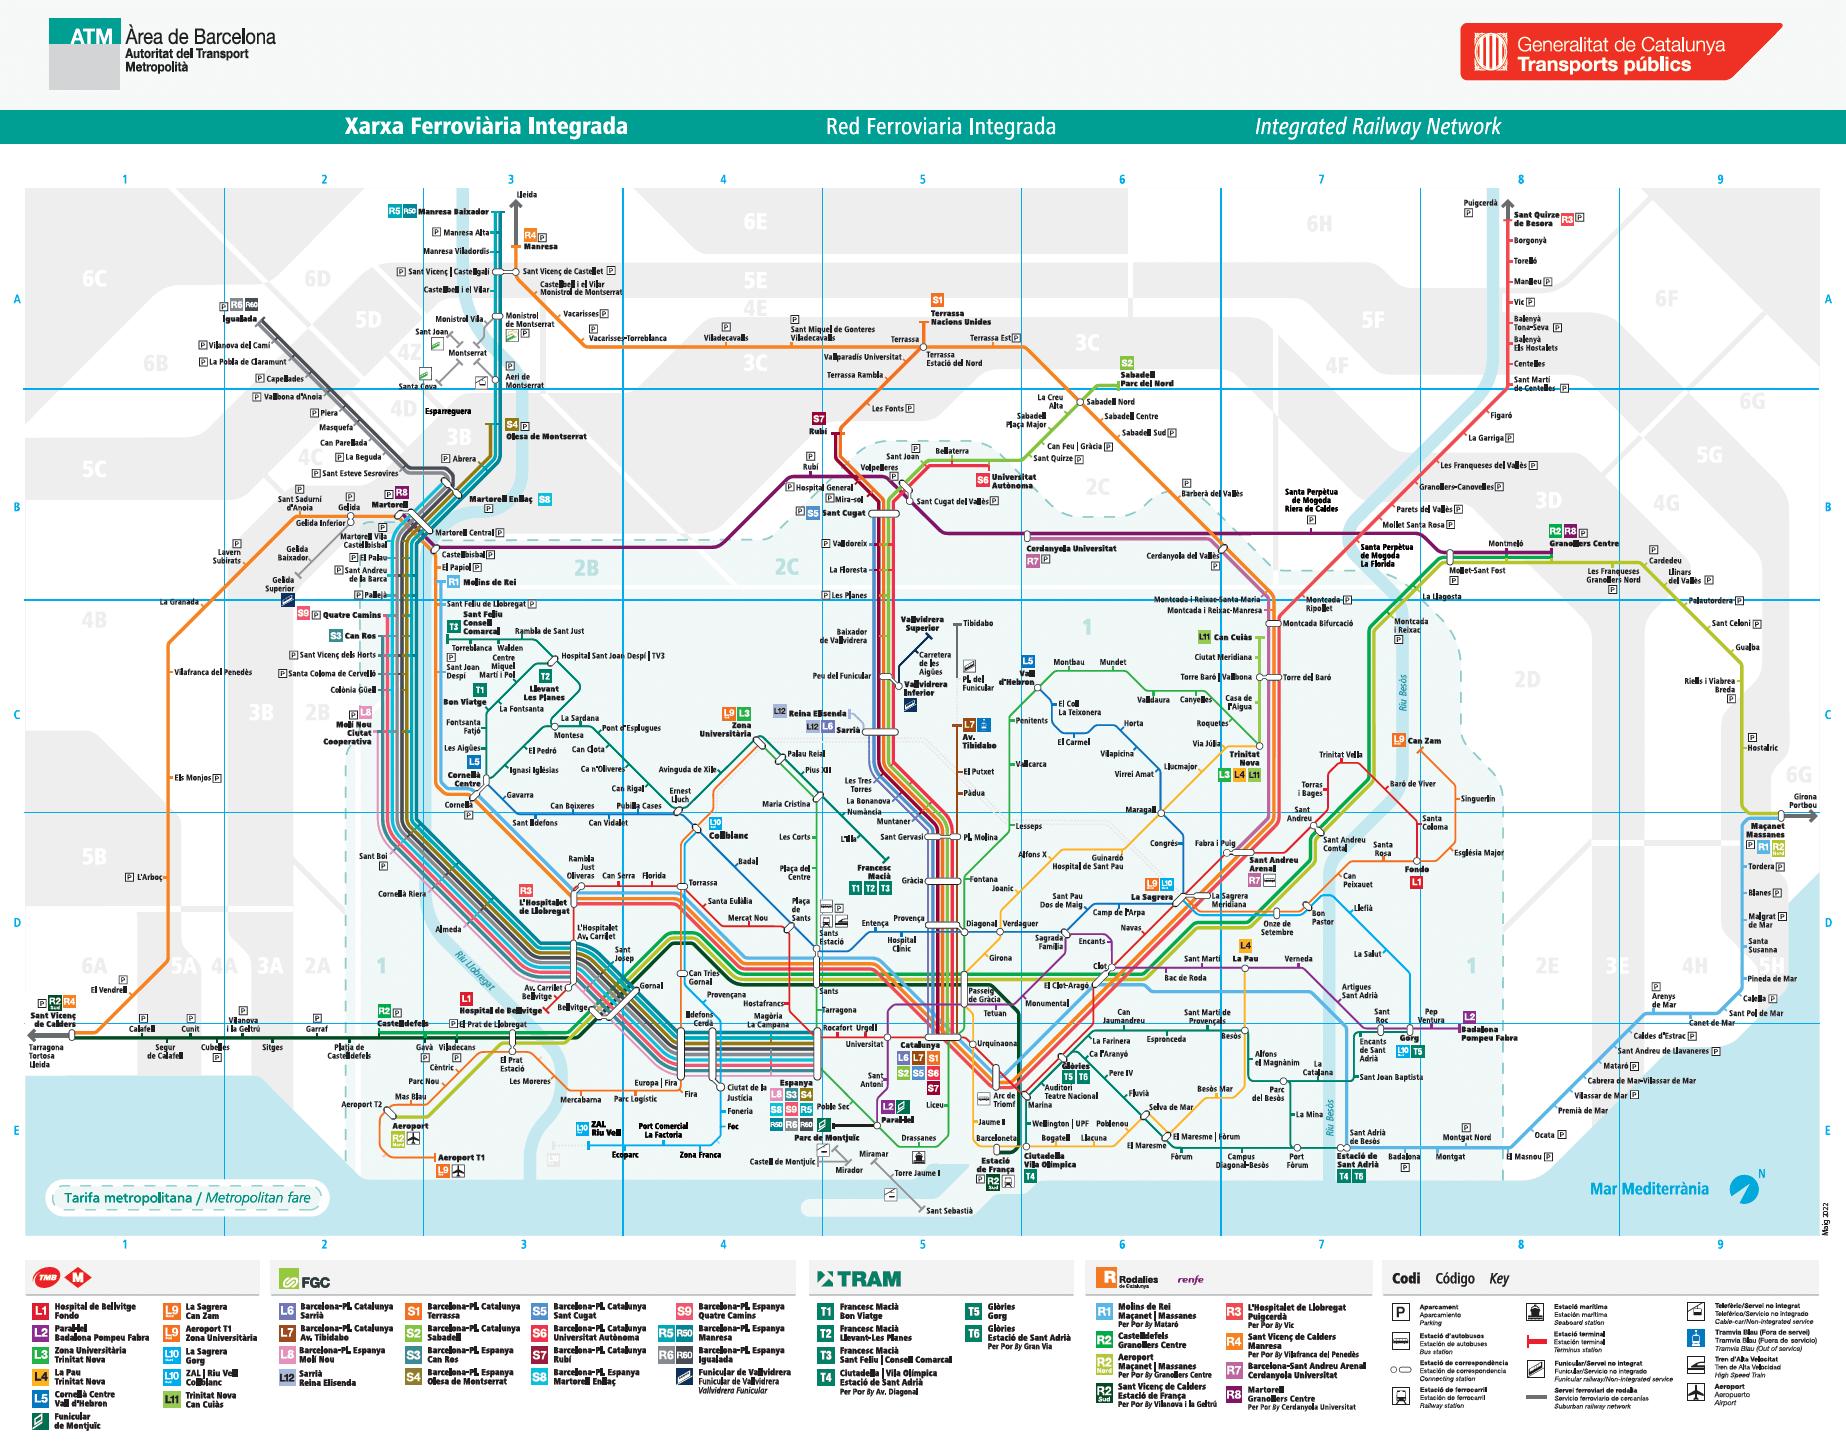 travel card barcelona metro